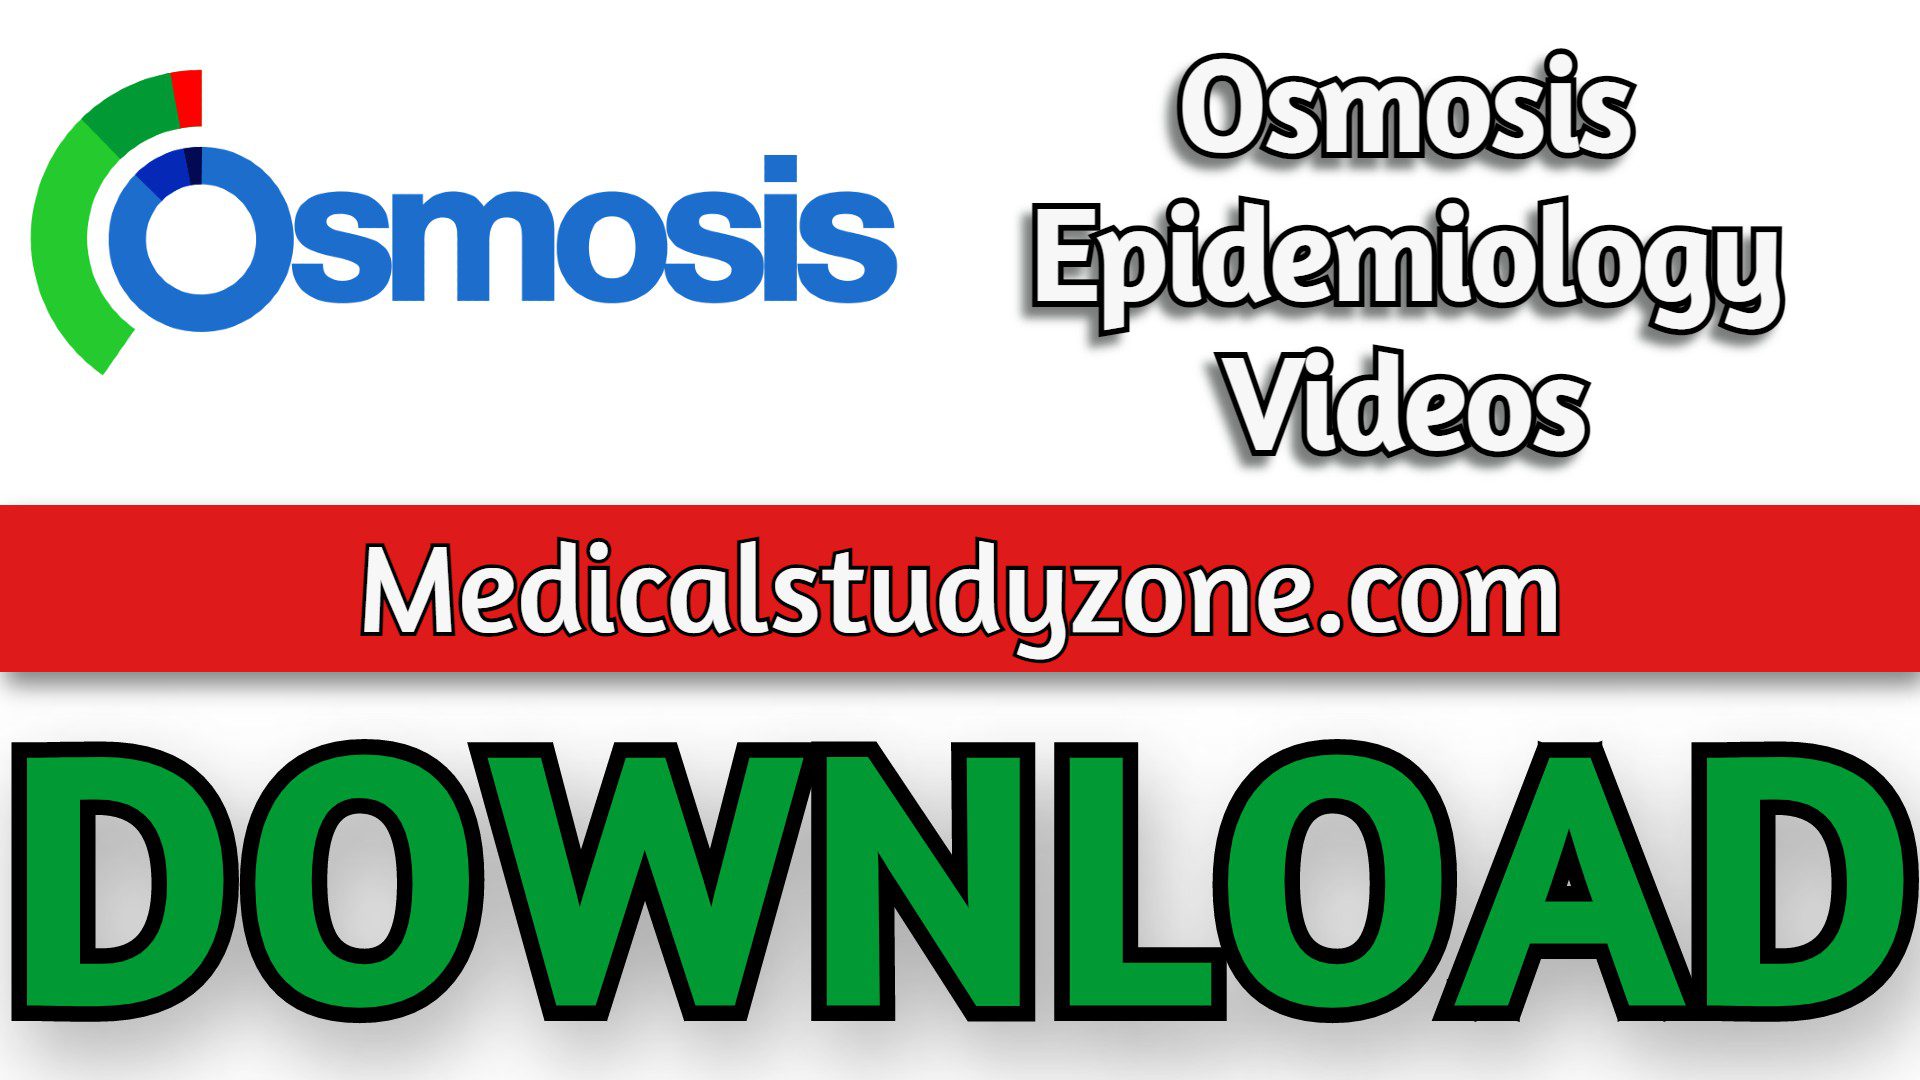 Osmosis Epidemiology Videos 2021 Free Download